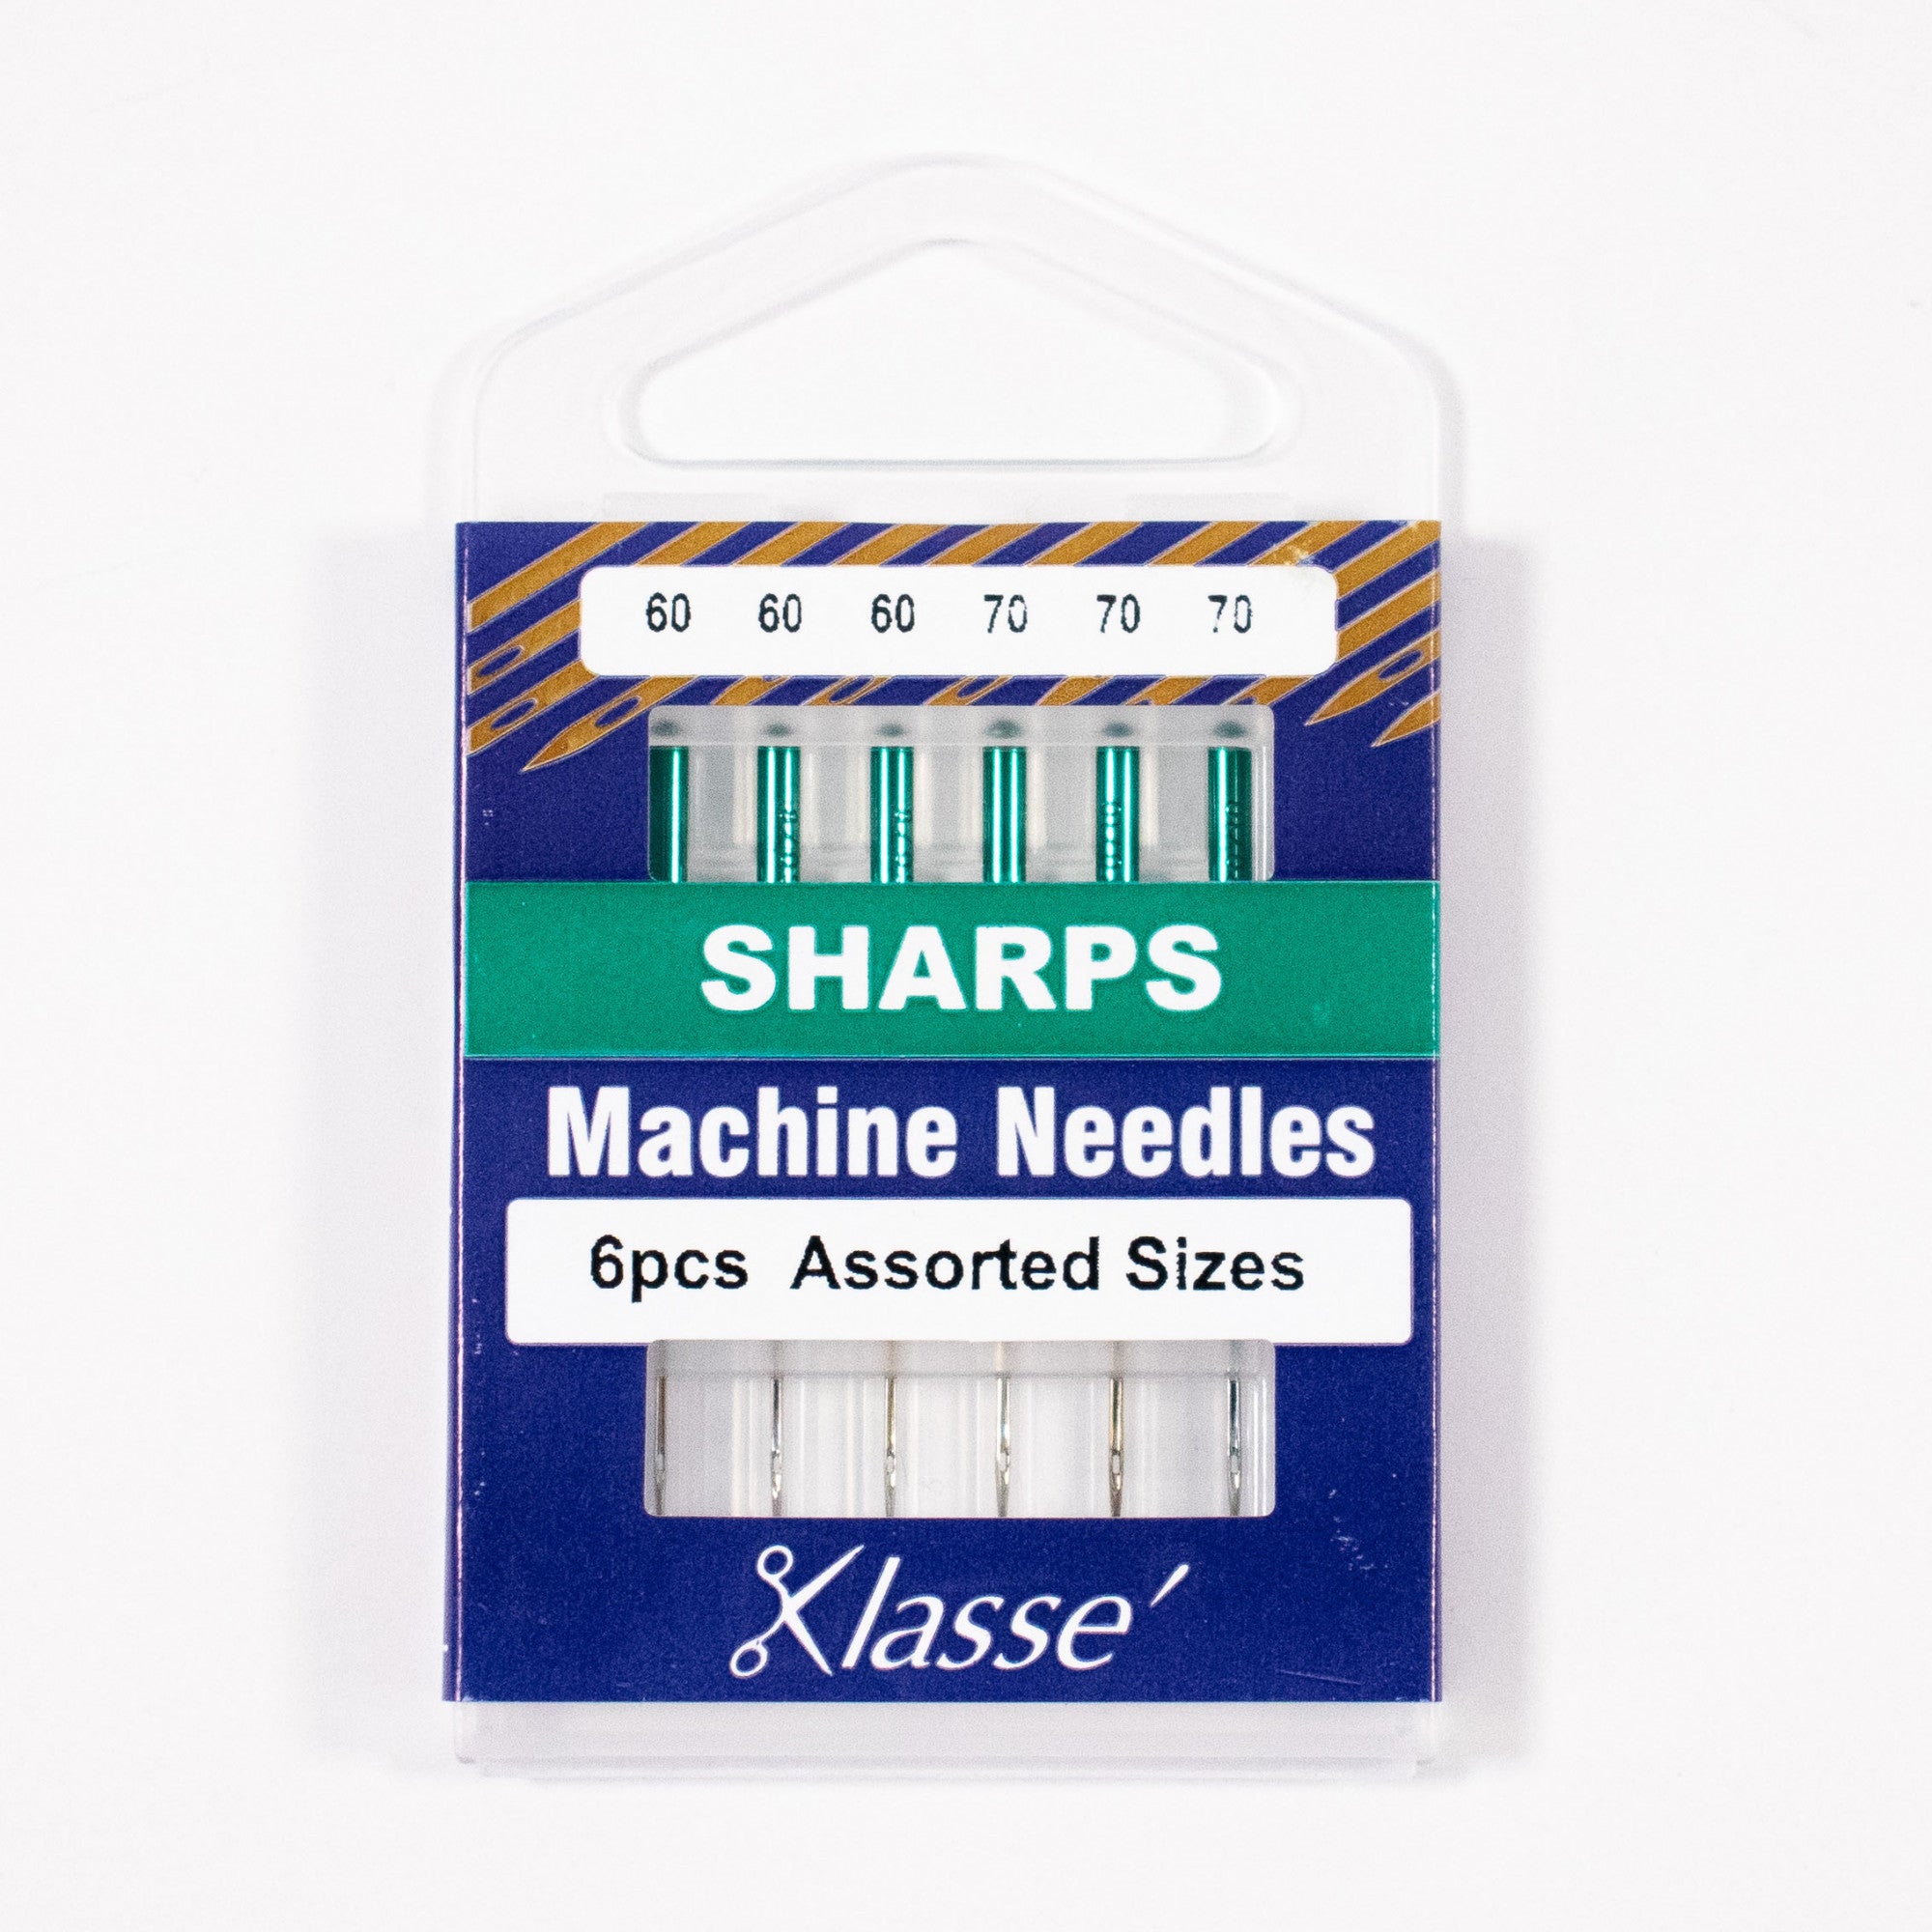 Sharps Needle 60/8 70/10 3 Each, Pkg.6